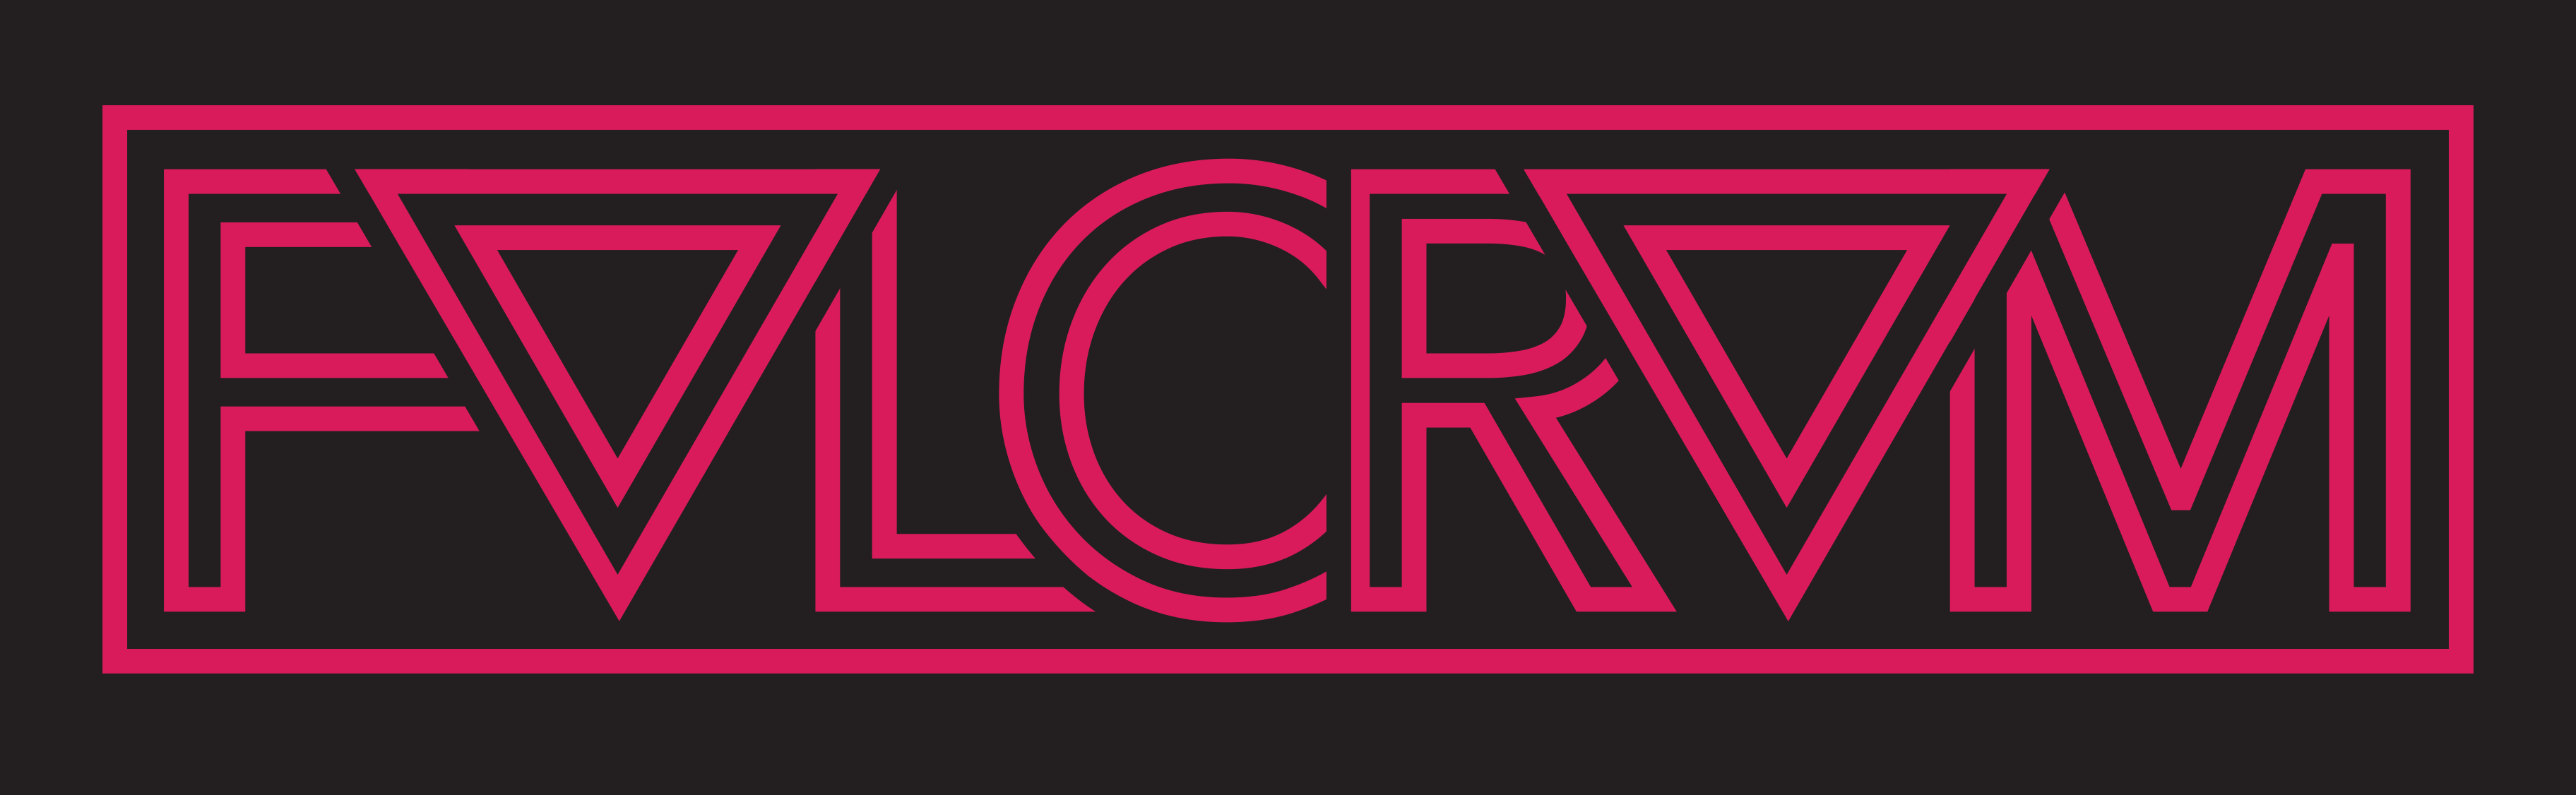 Practice Logo - FVLCRVM